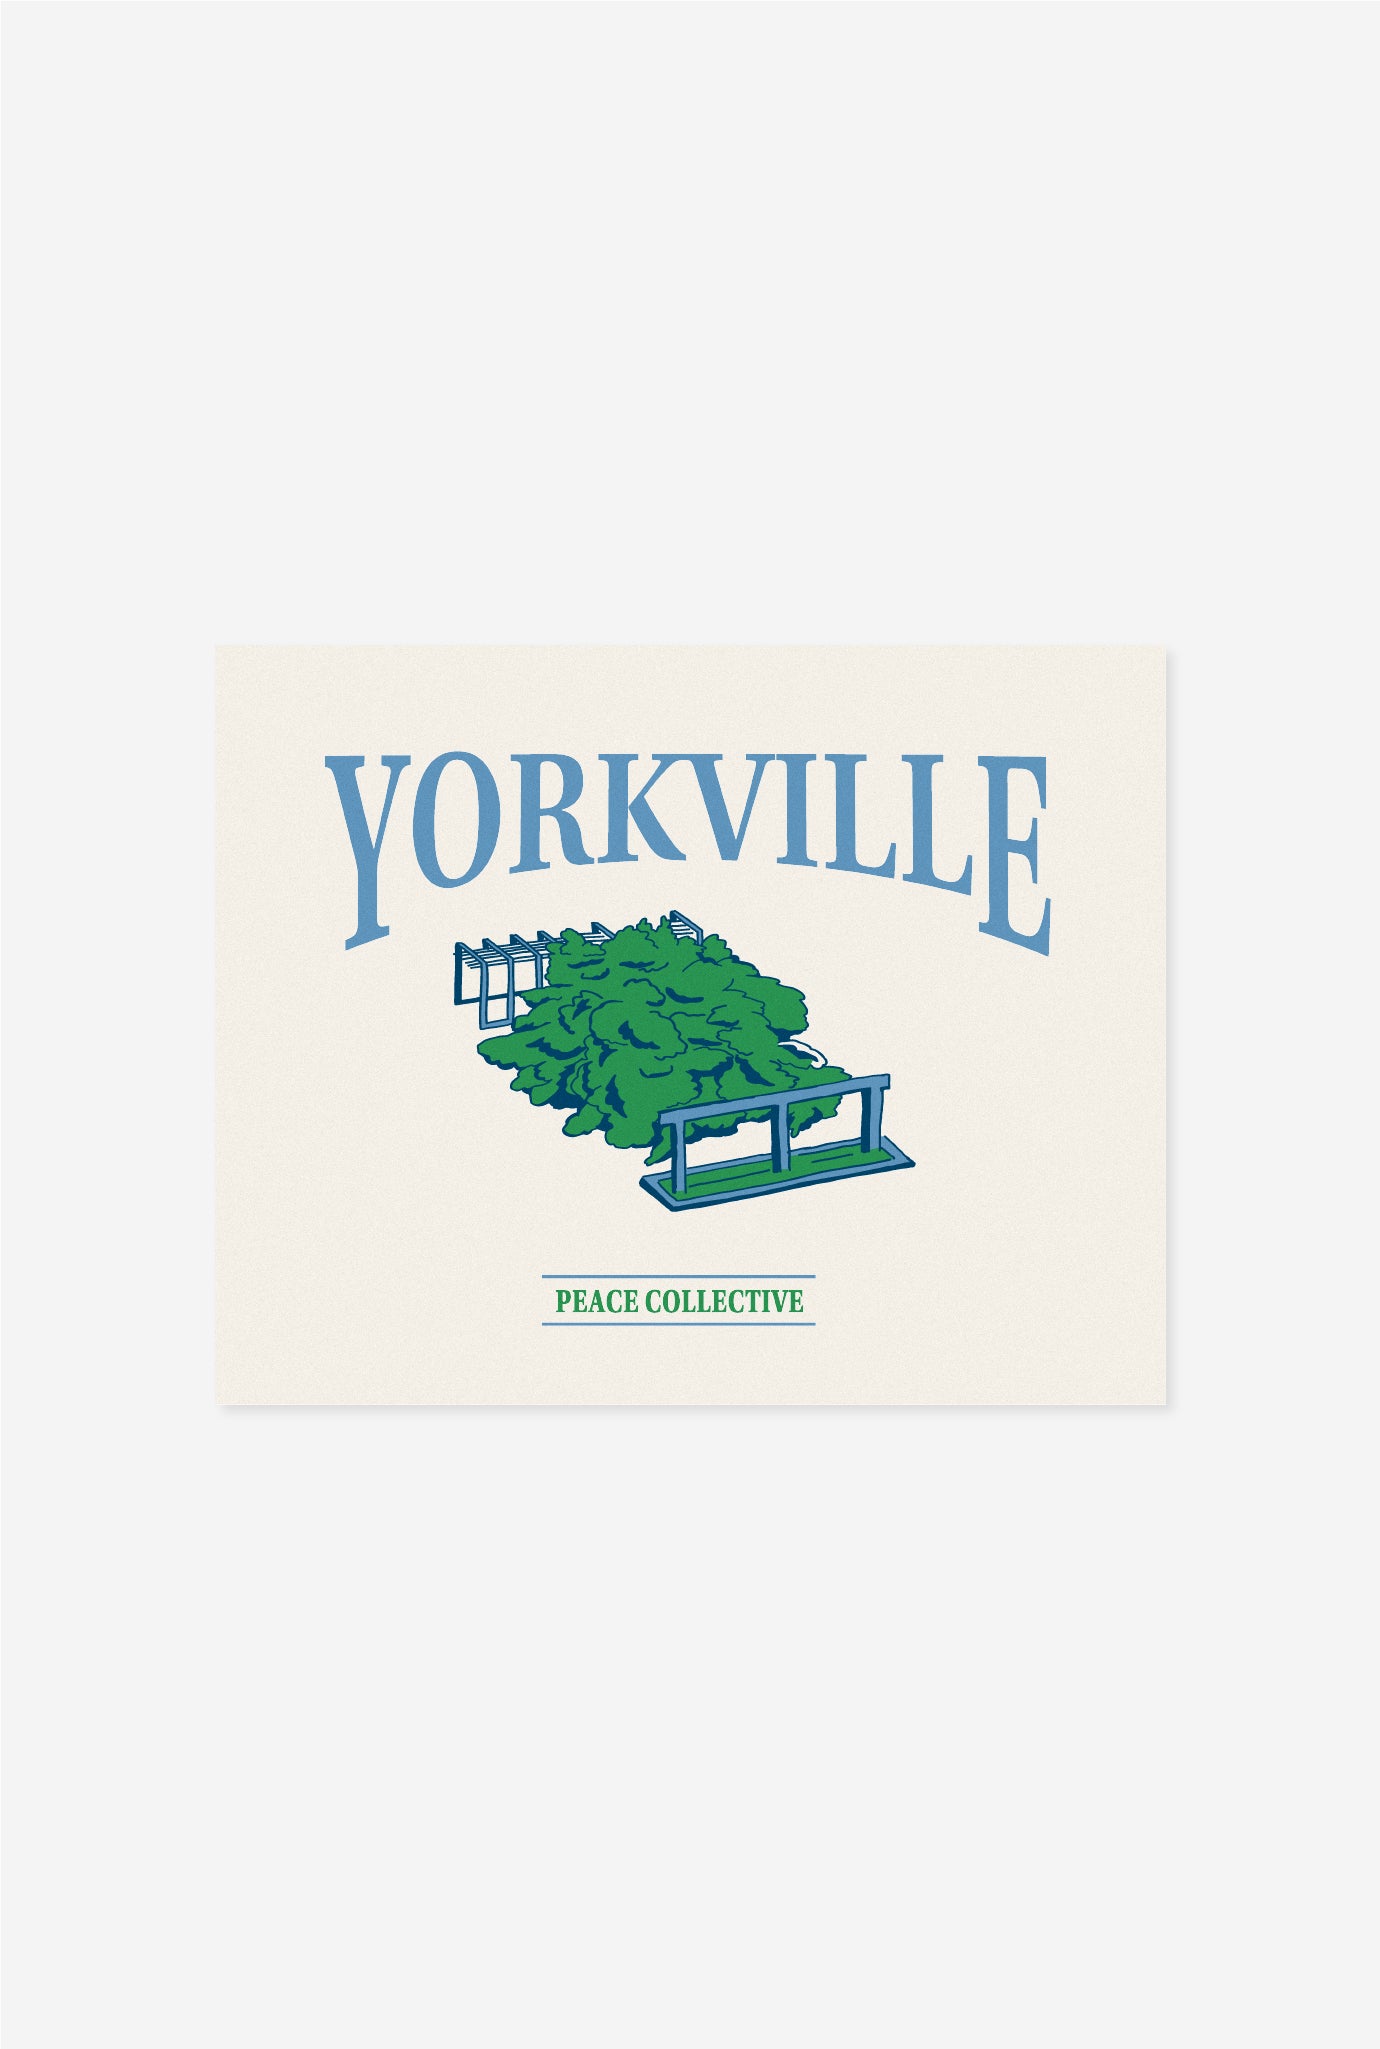 Yorkville 8x10 Prints